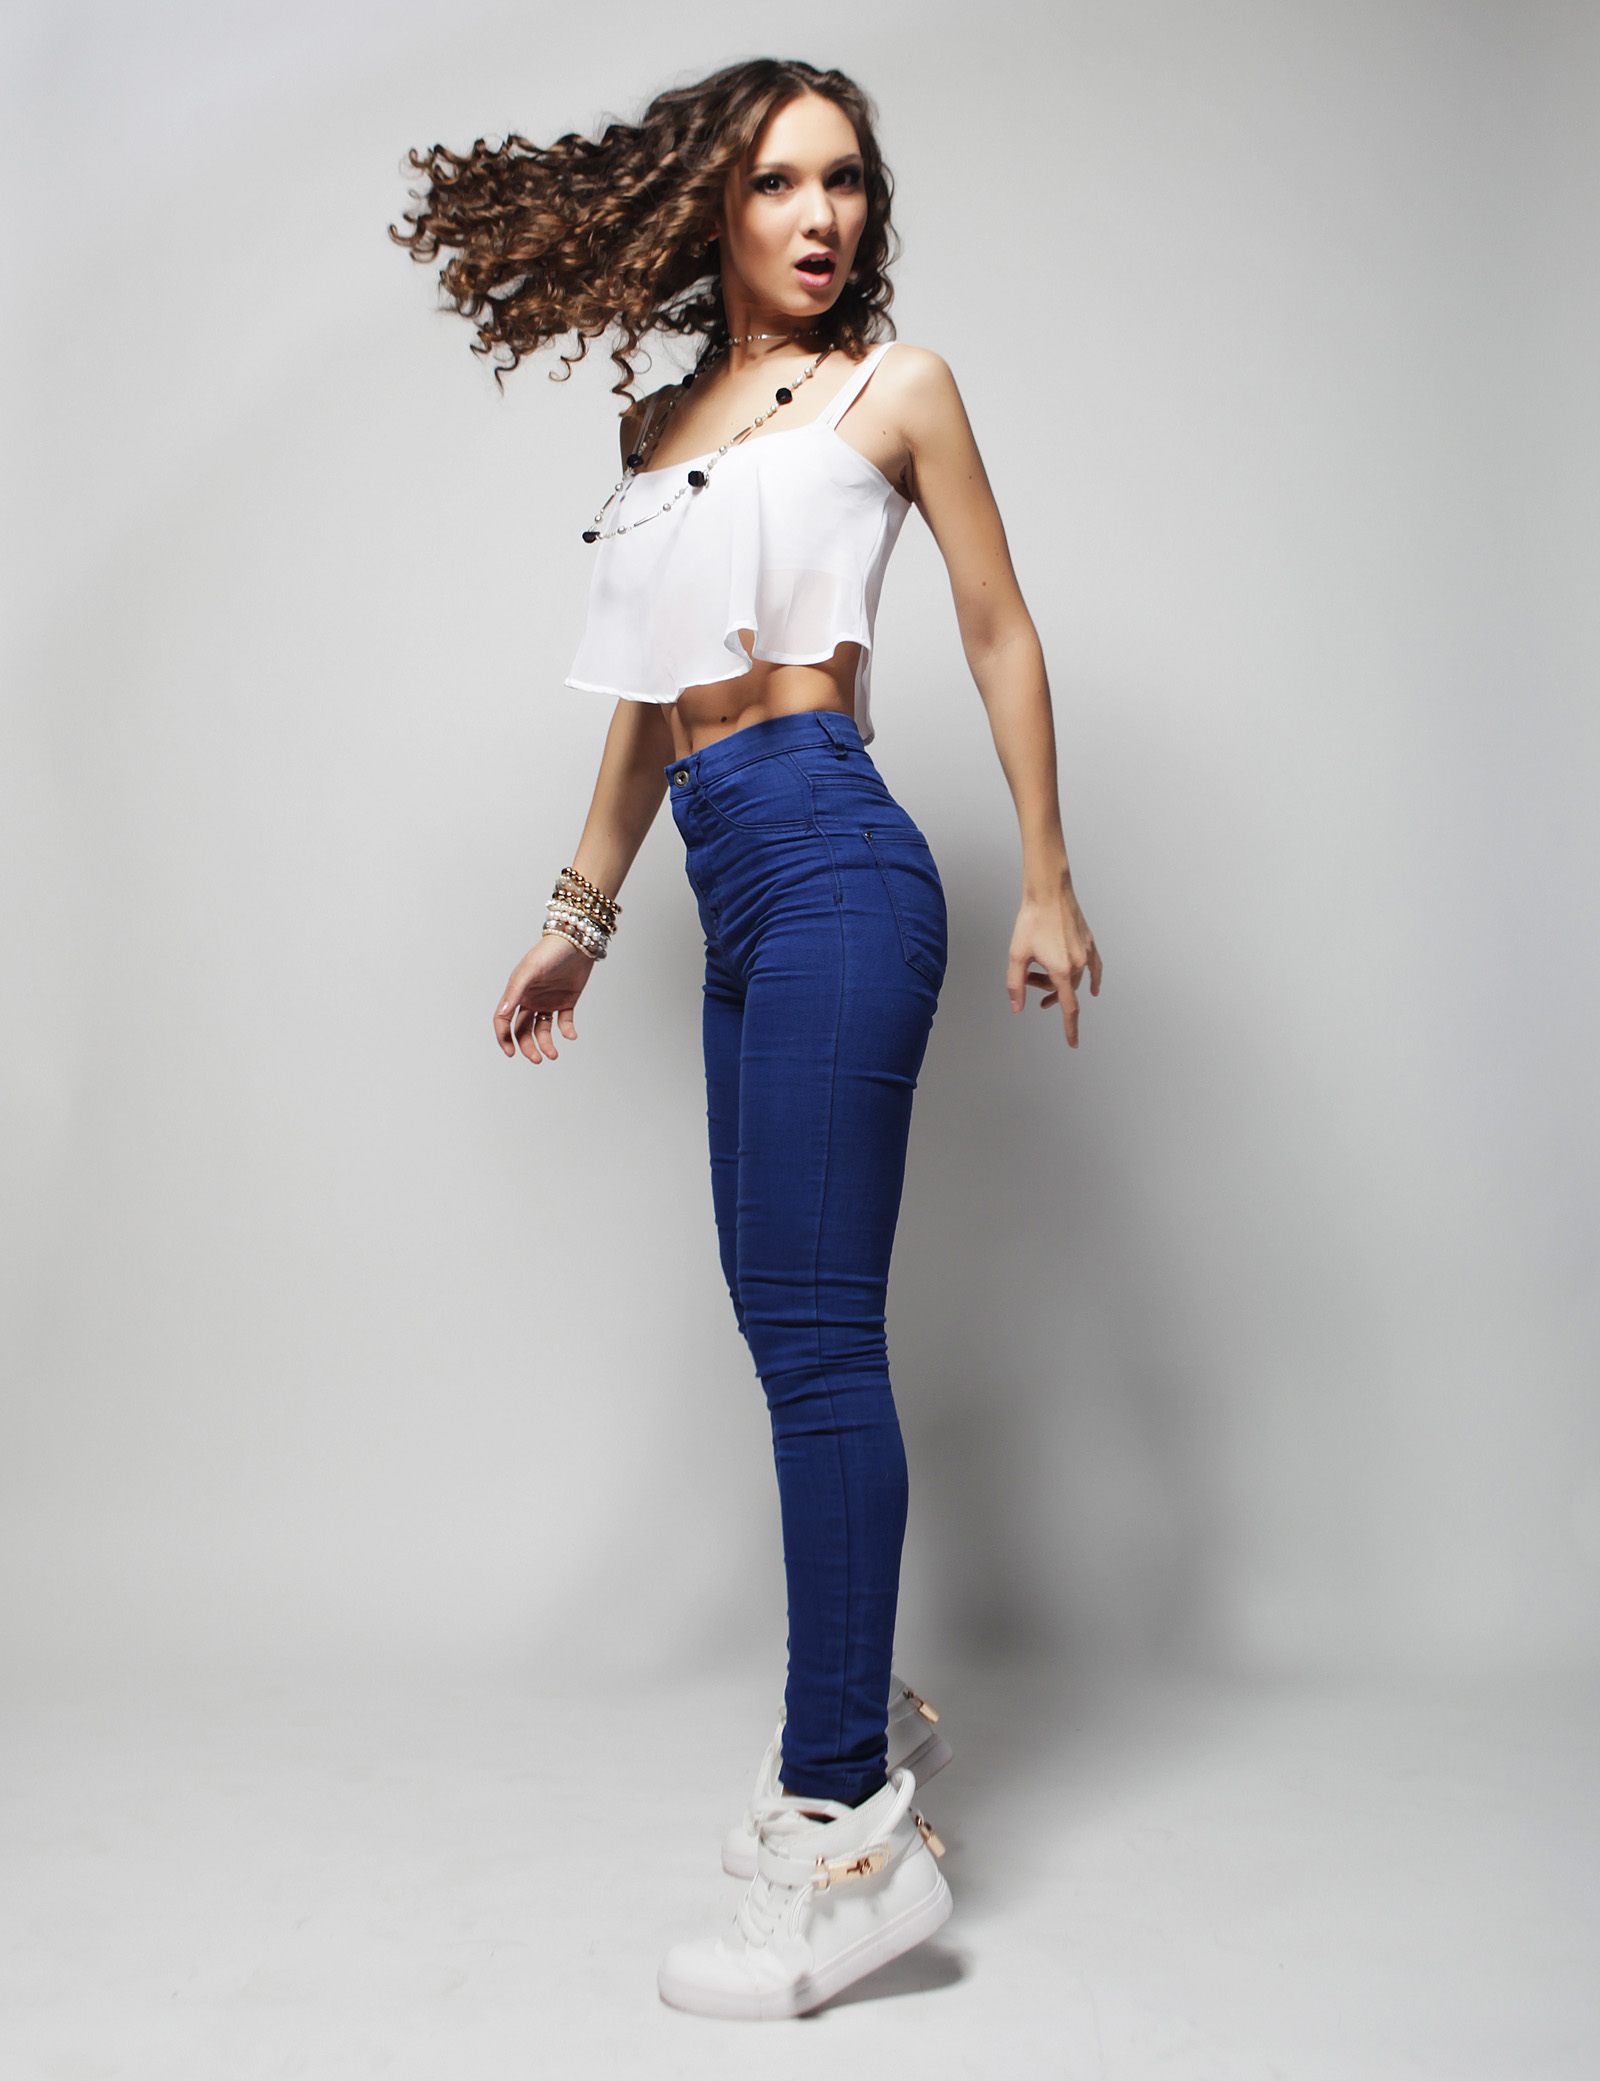 Jeans swinging curly hair beauty 51811 - Star models - Figure